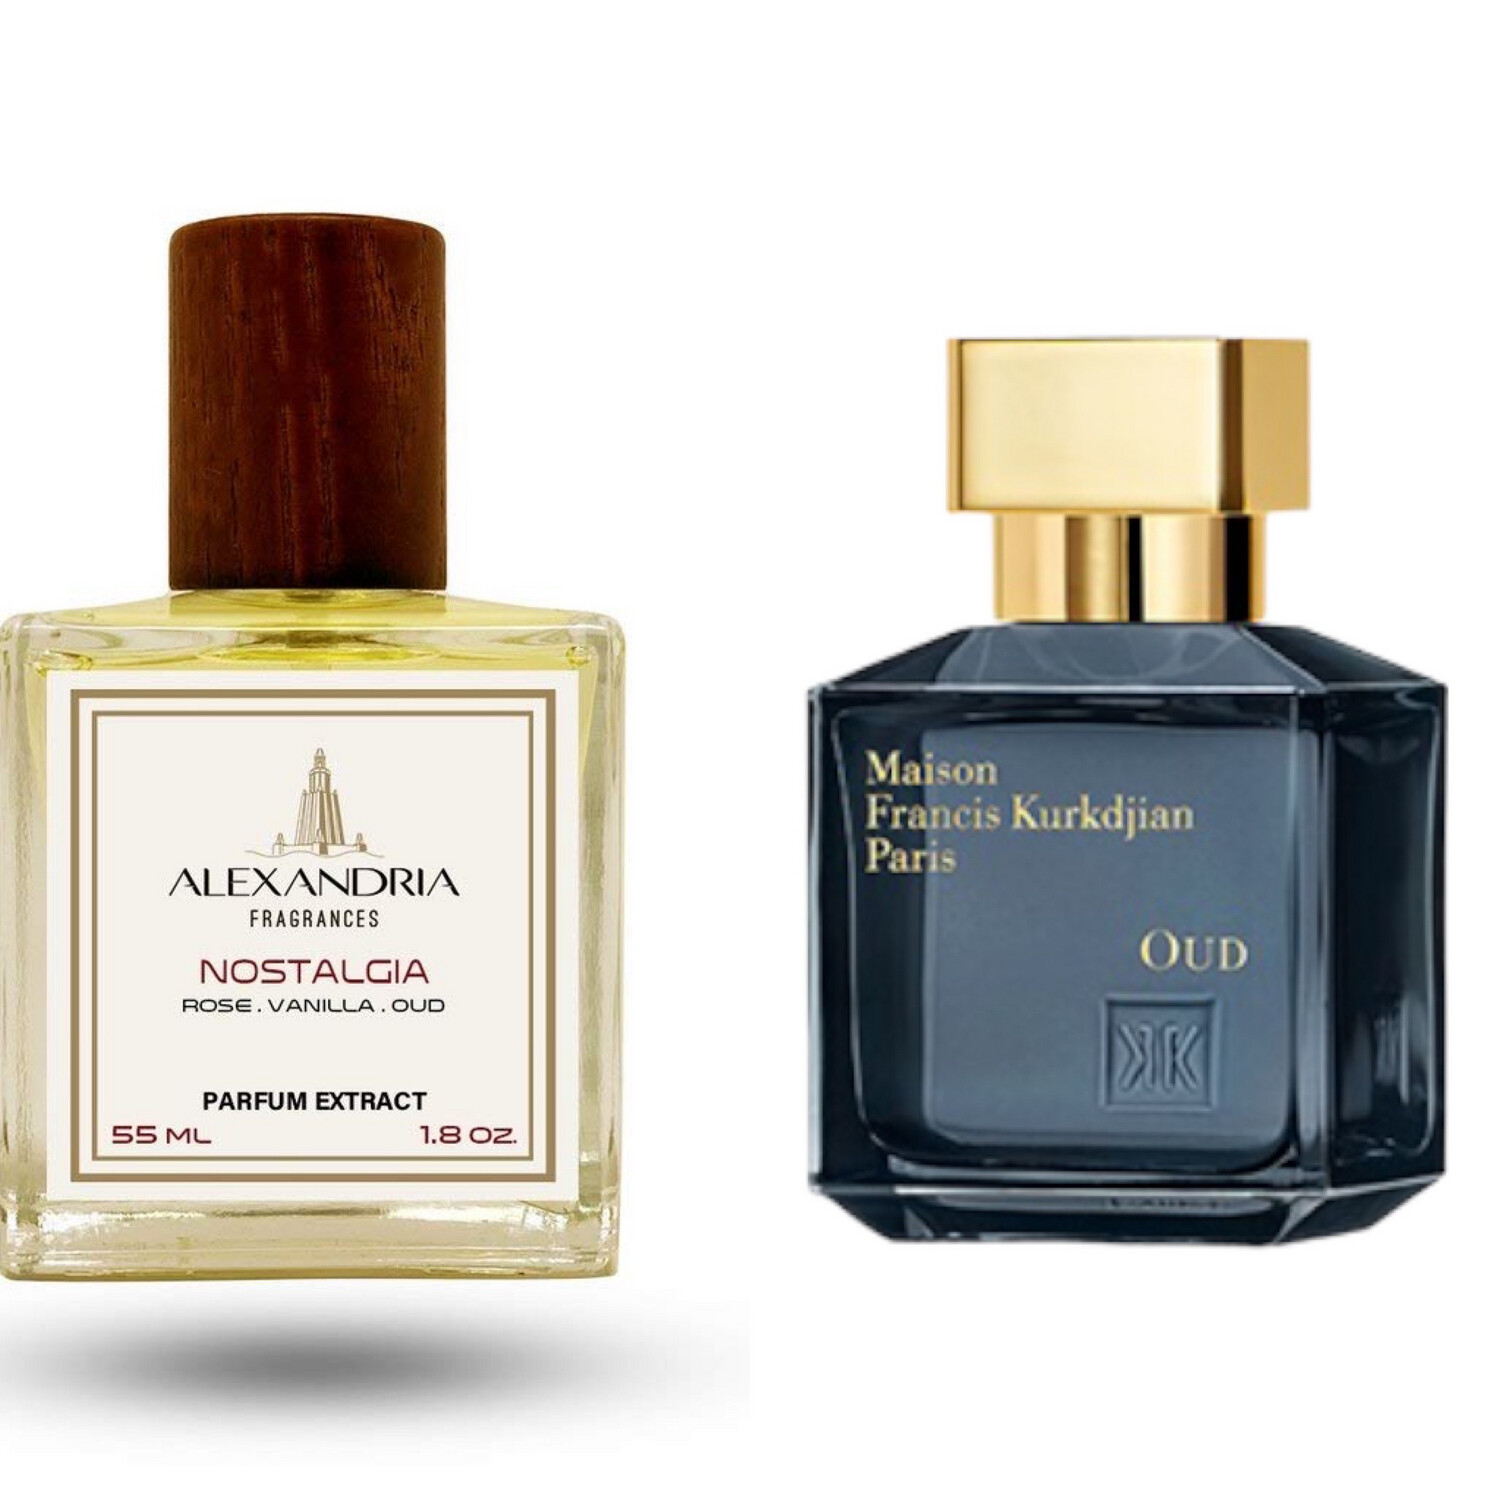 Nostalgia Inspirado en Maison Francis Kurkdjian Oud Satin Mood 55ML extracto perfume Alexandria Fragrances